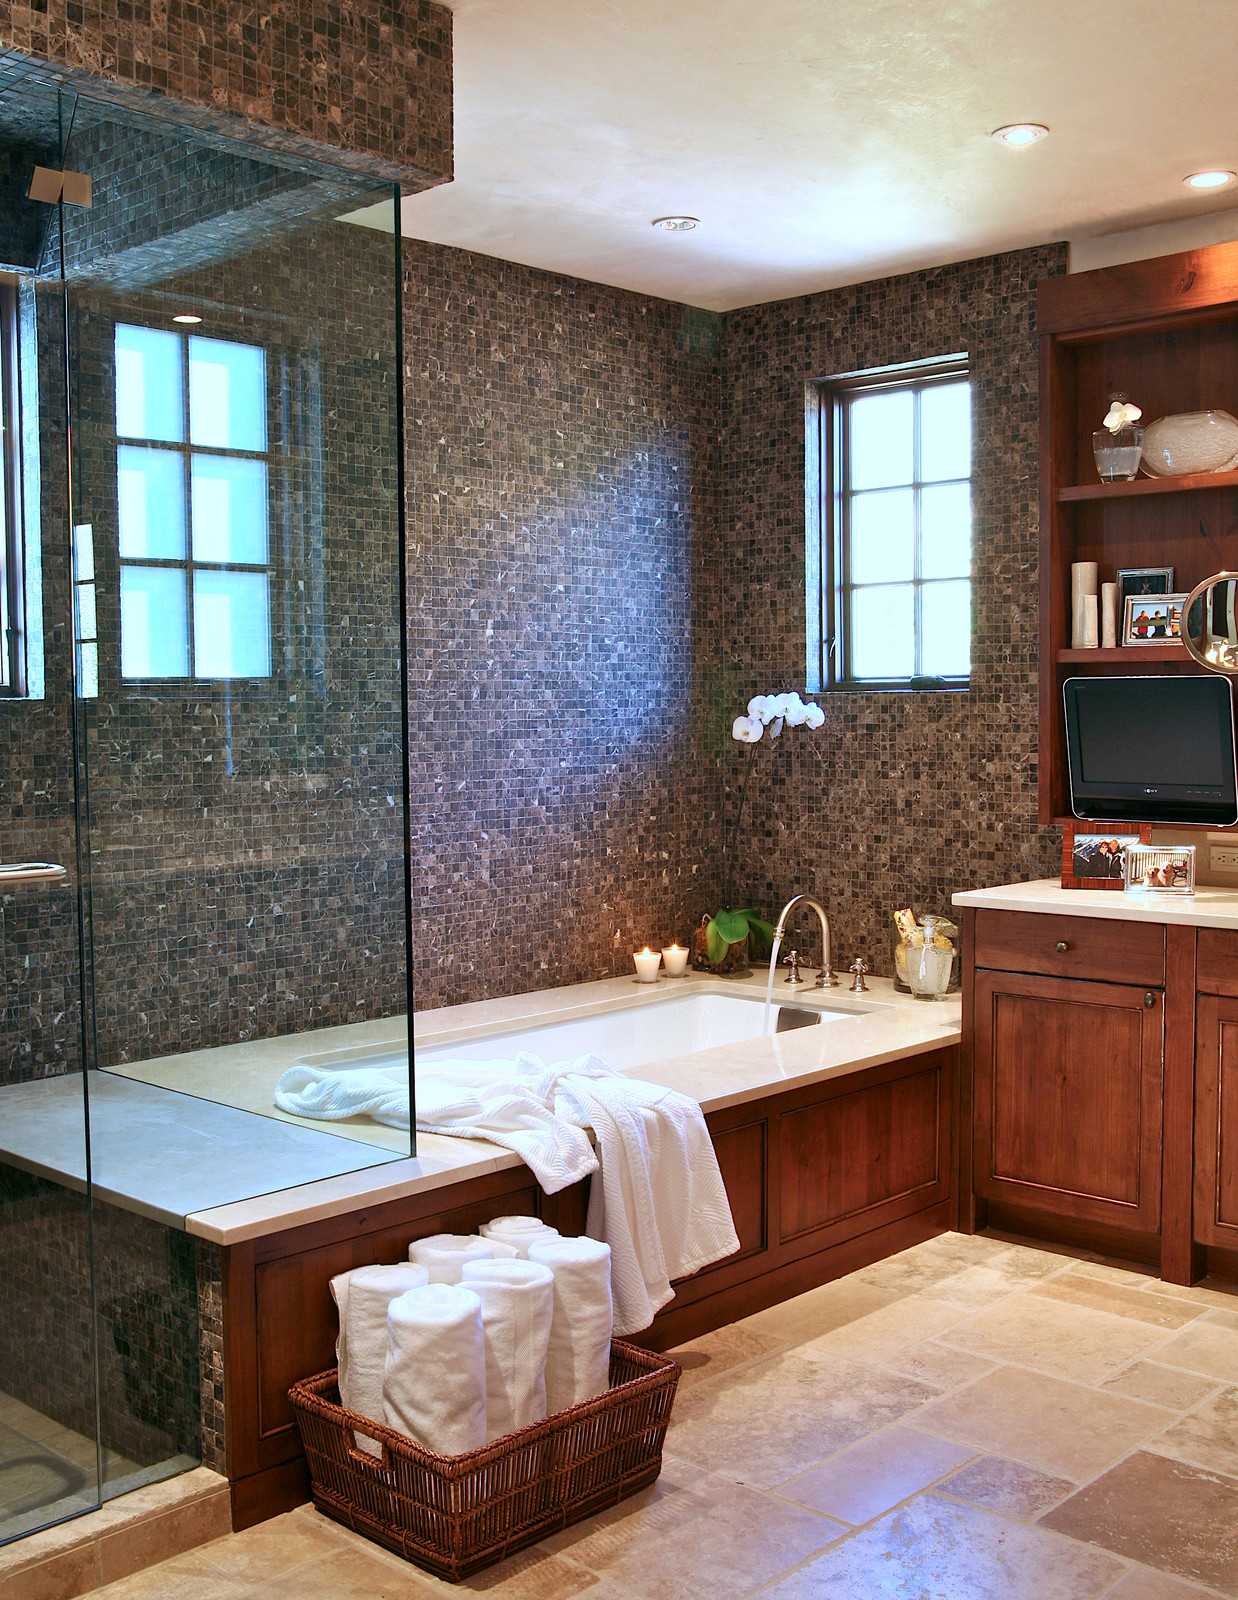 Rustic Bathroom Ideas Photo Gallery - BEST HOME DESIGN IDEAS